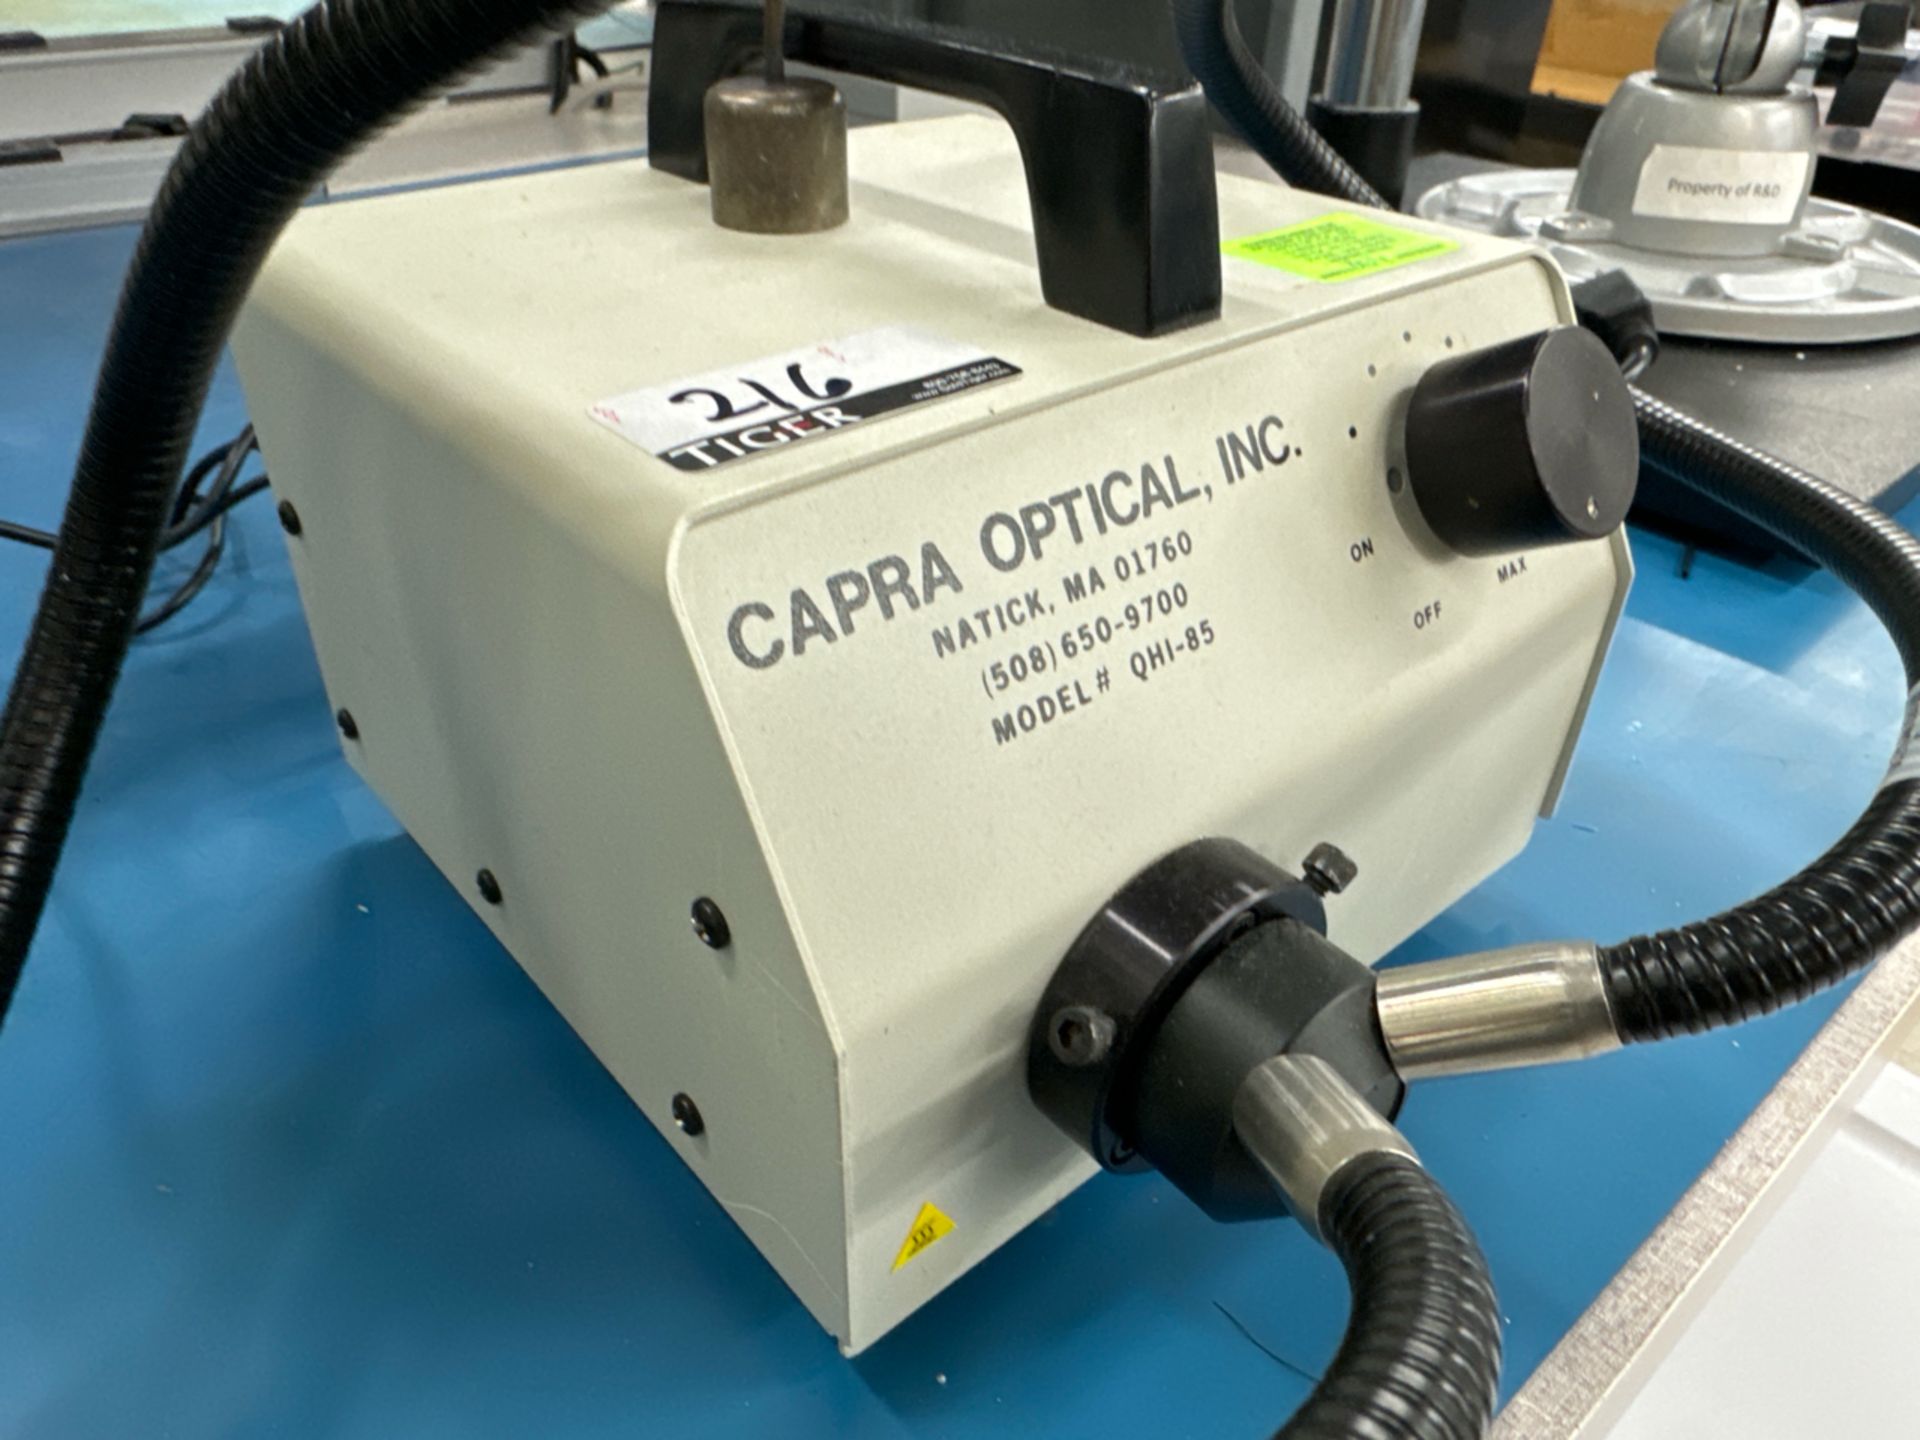 Capra Optical Inc. Fiber Optic Illuminator - Image 2 of 3